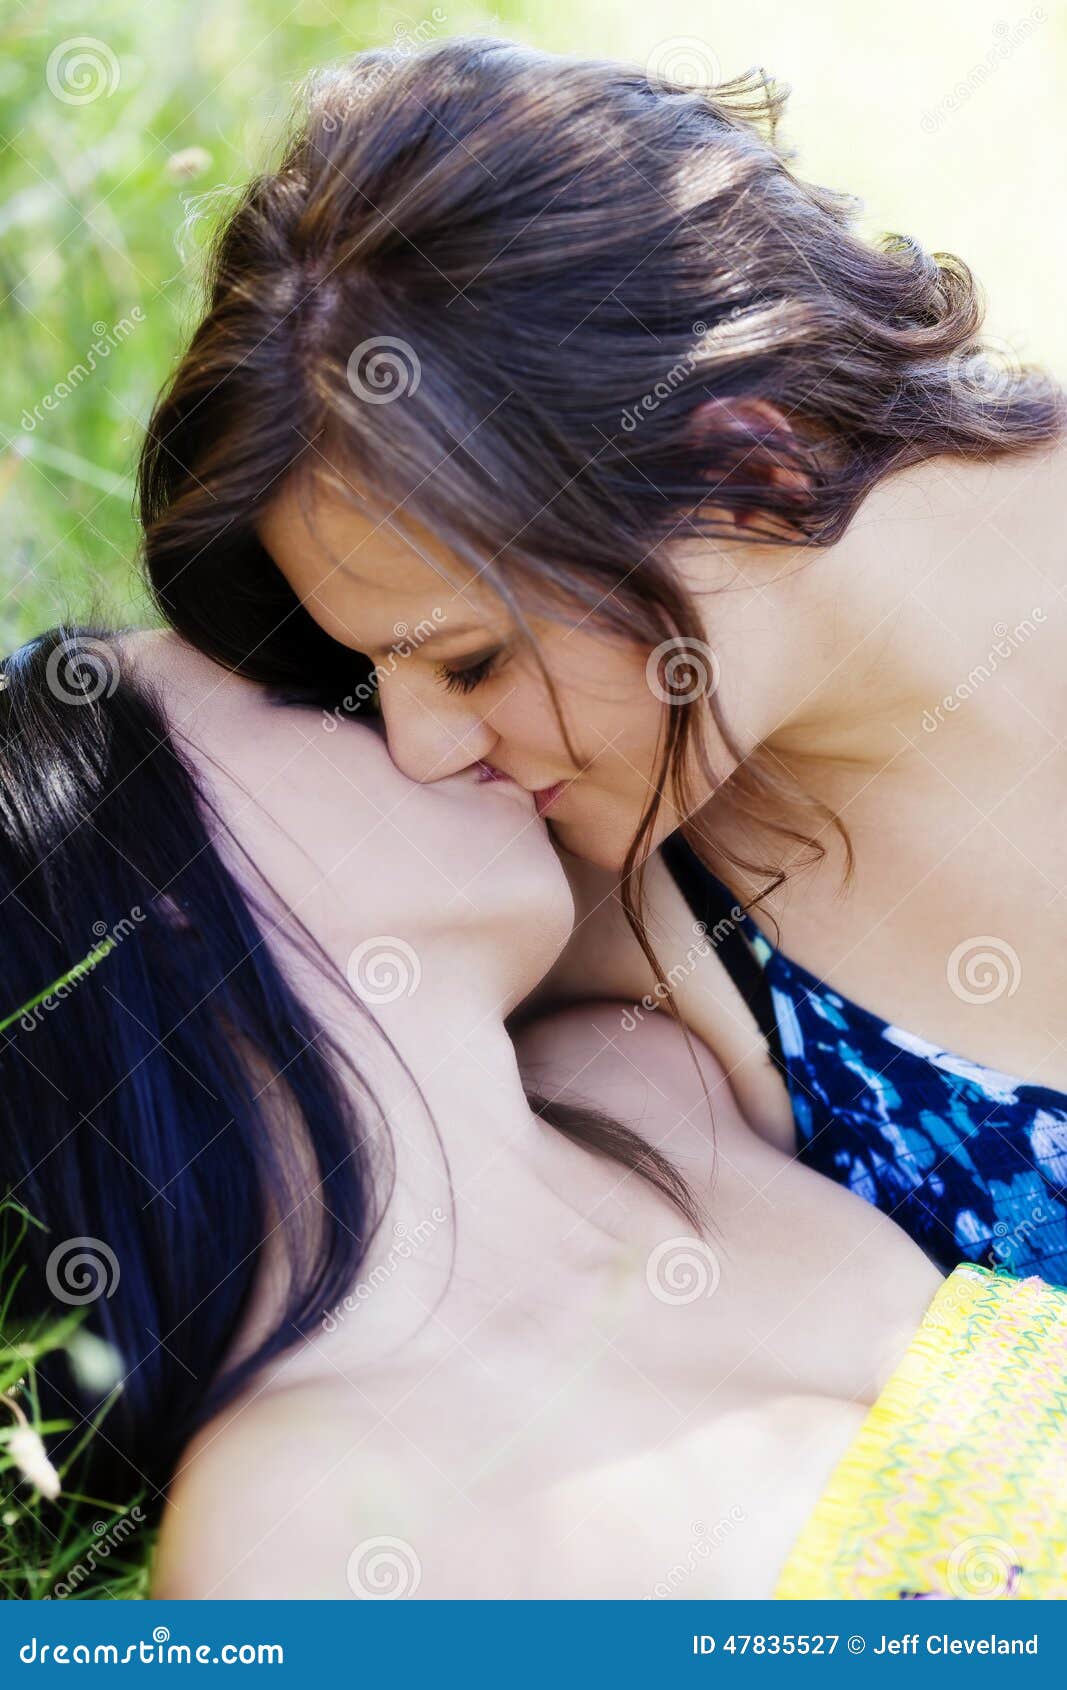 Girls Kissing Eating Pussy